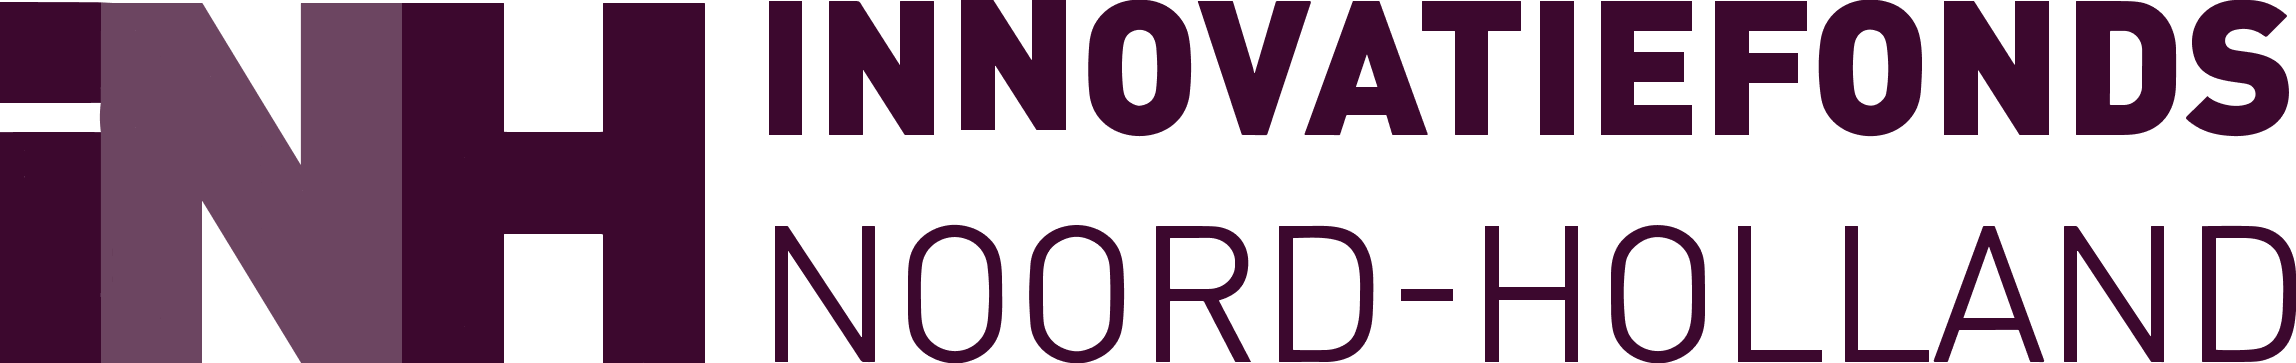 innovatiefonds nh logo